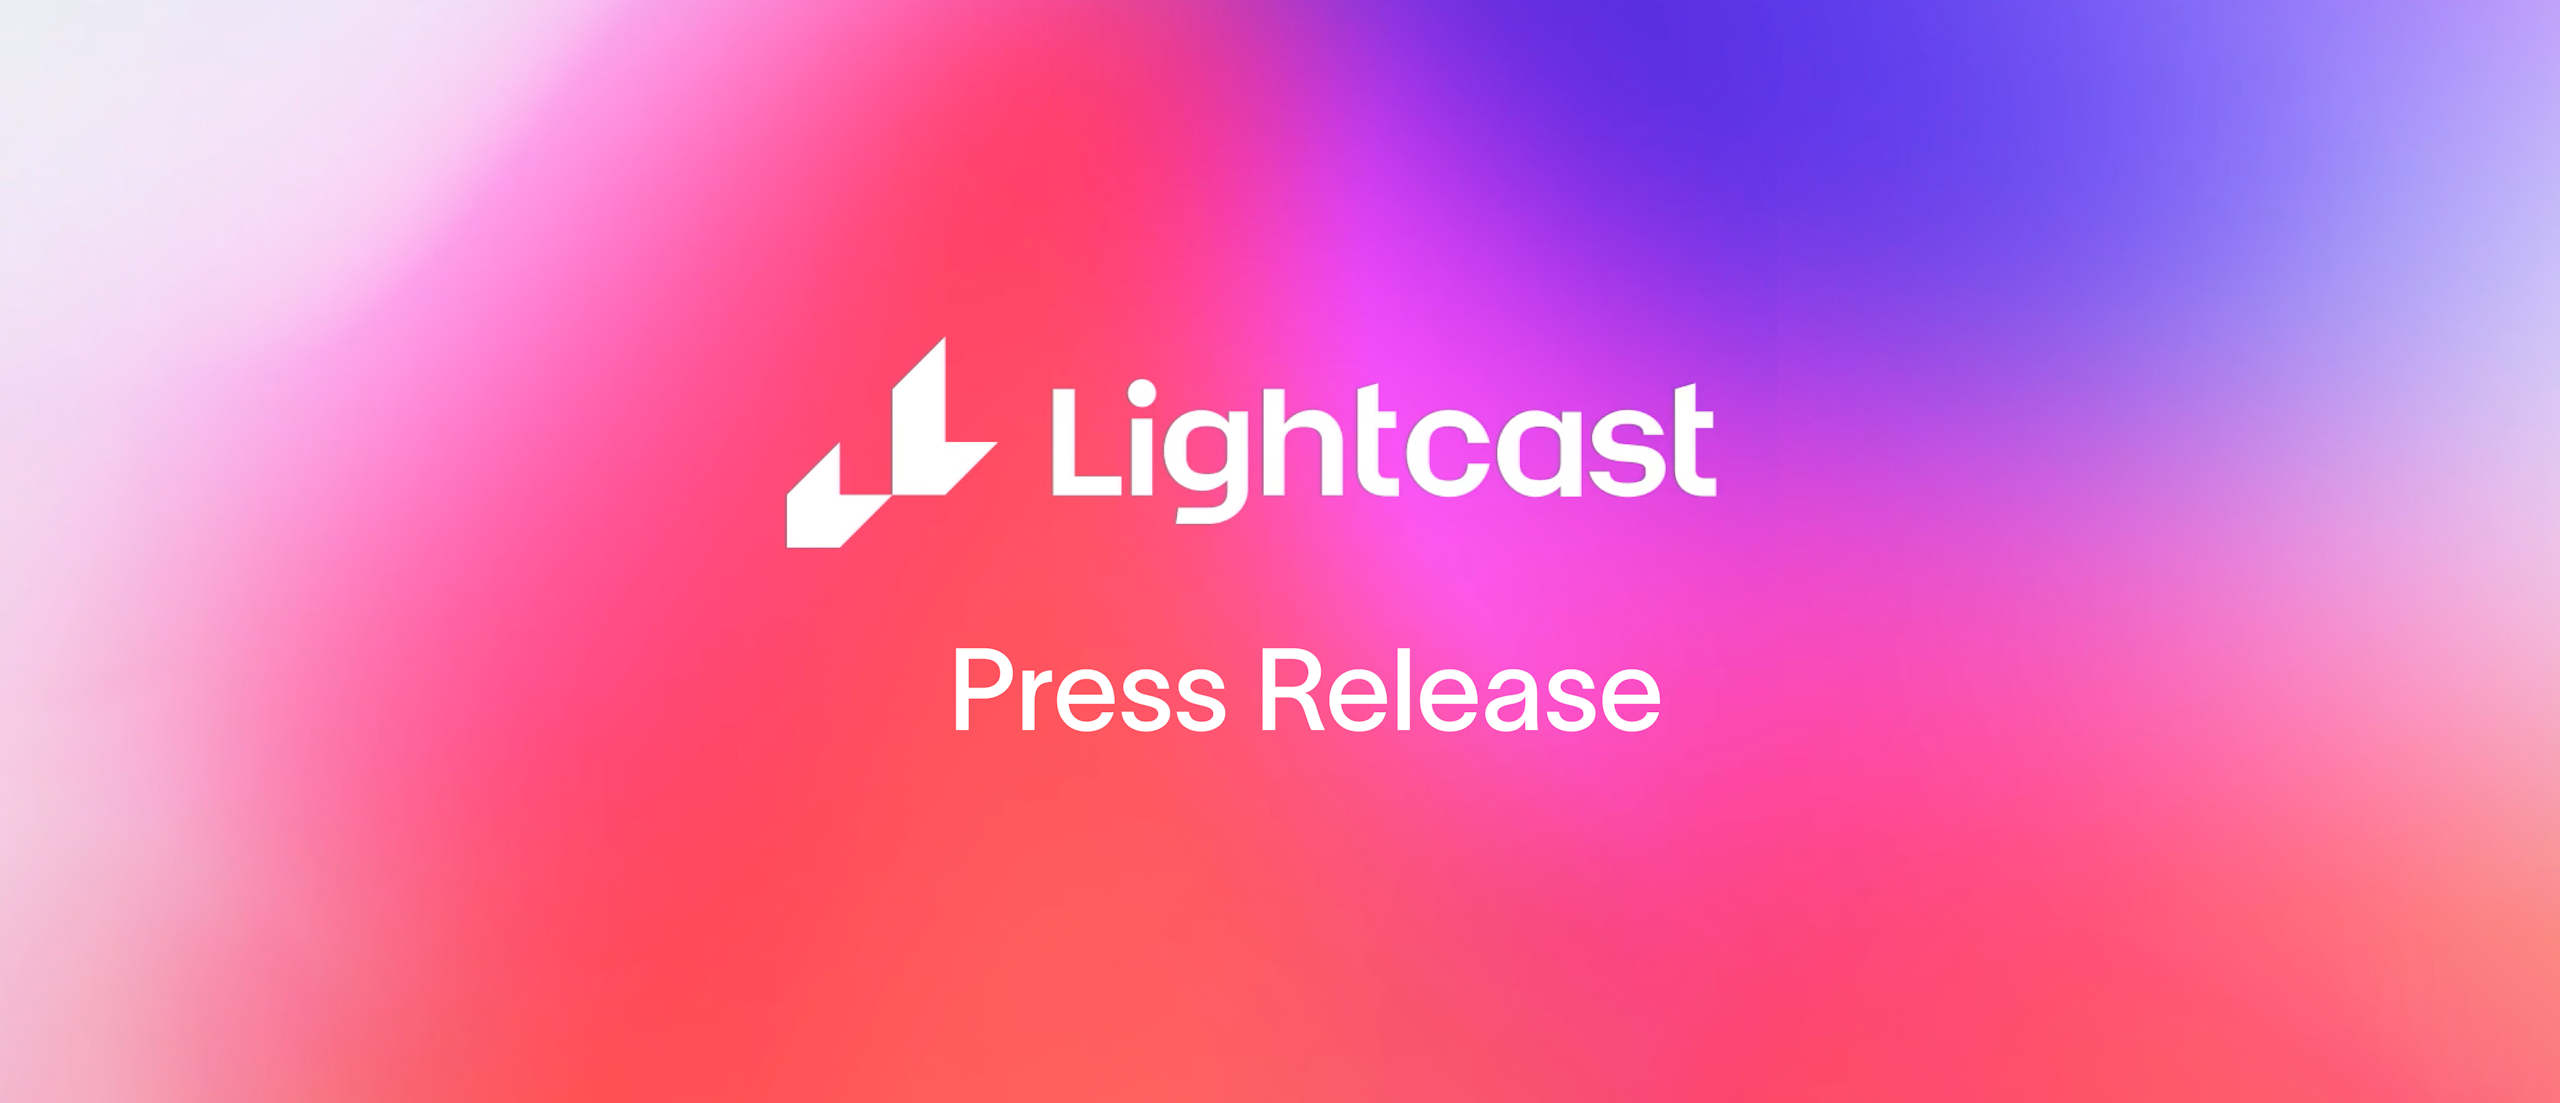 Header image reading "Lightcast press release"